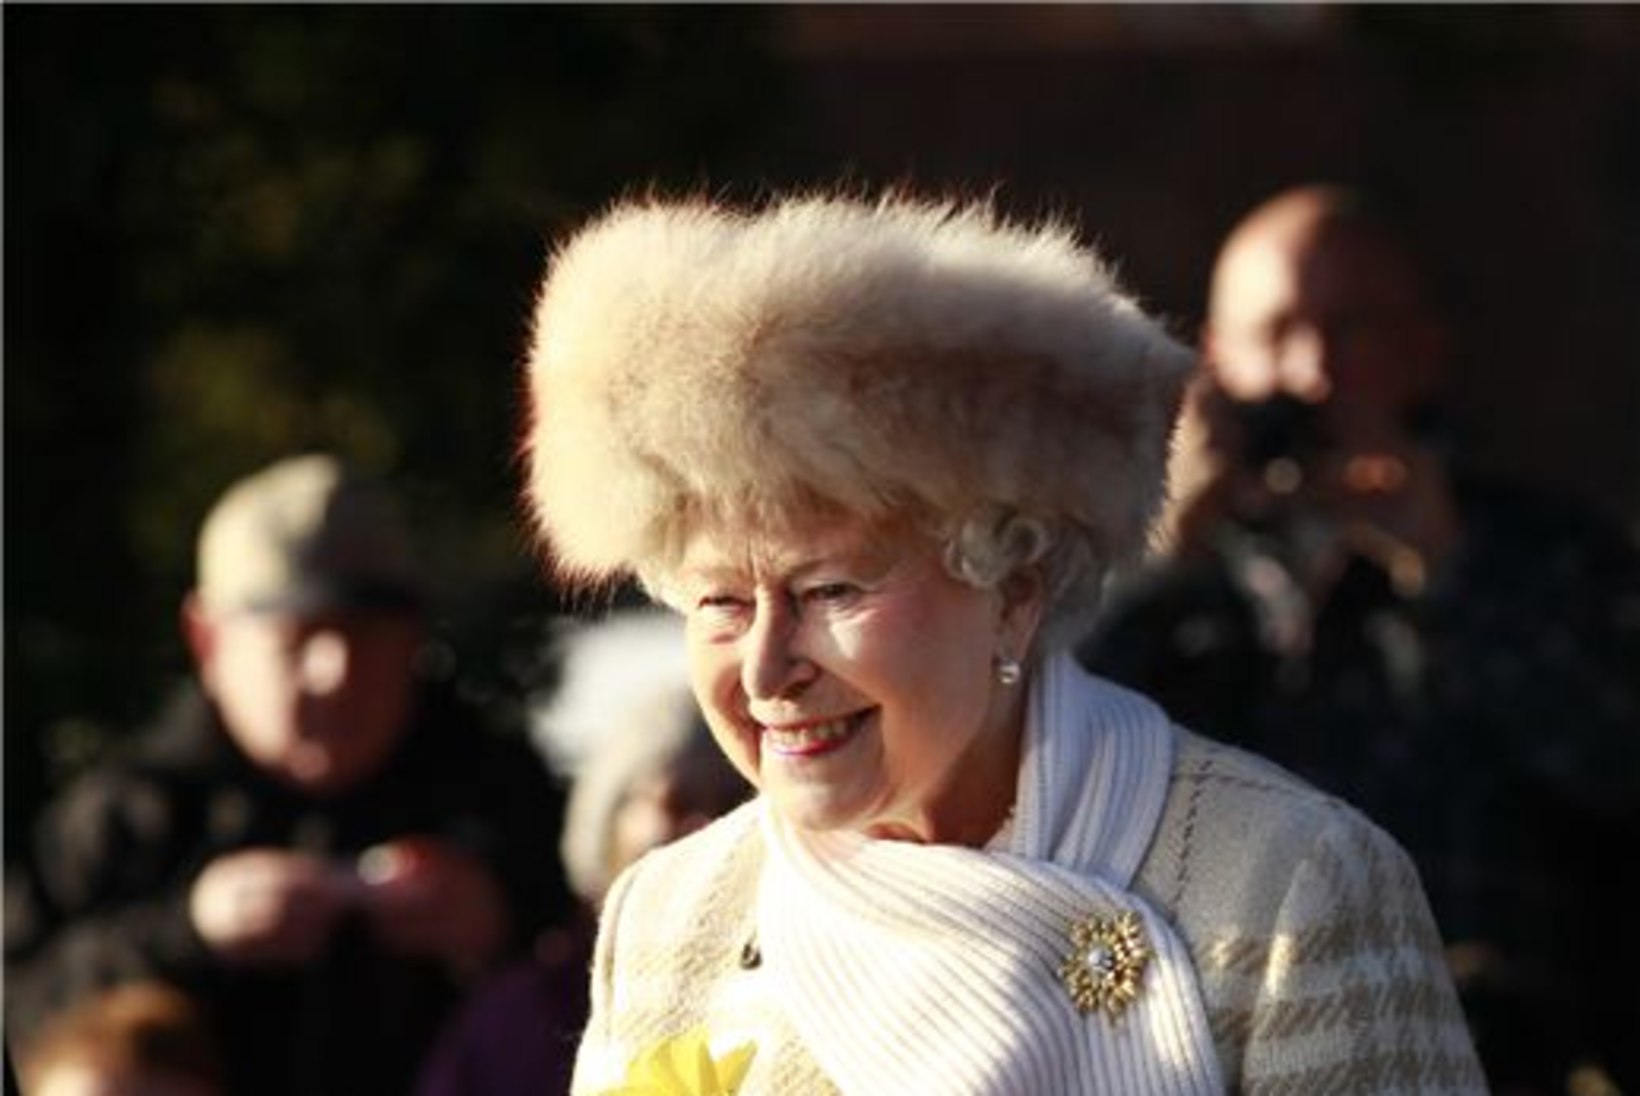 Kuninganna Elizabeth II sai esimese lapselapselapse